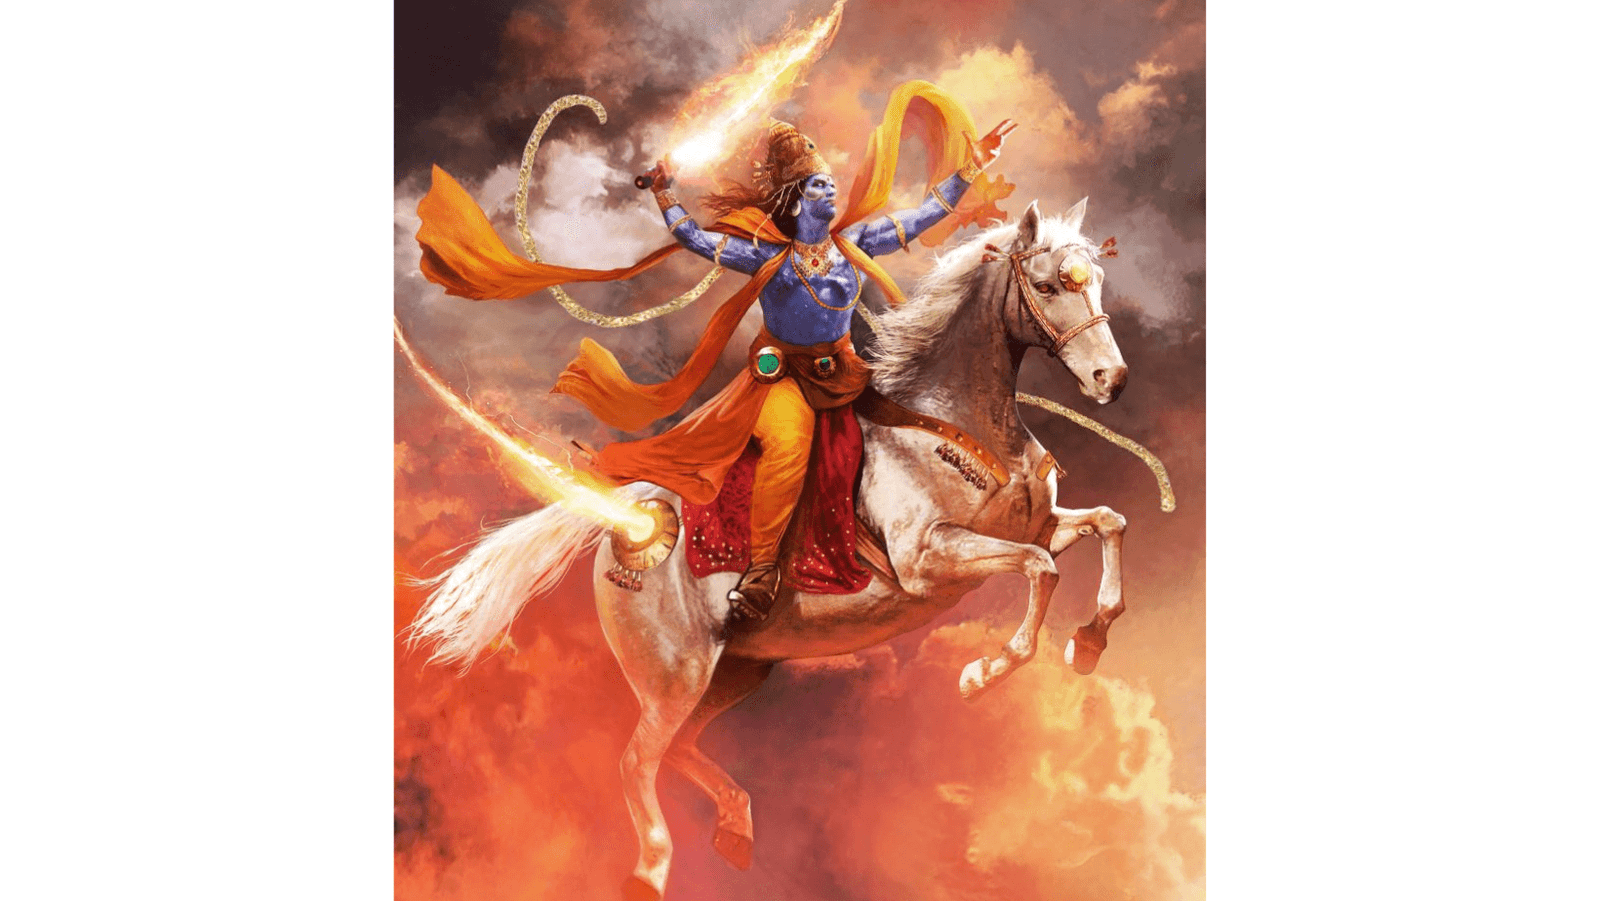 All About Kalki Avatar And Reincarnation Of Lord Vishnu - BeerBiceps |  Ranveer Allahbadia